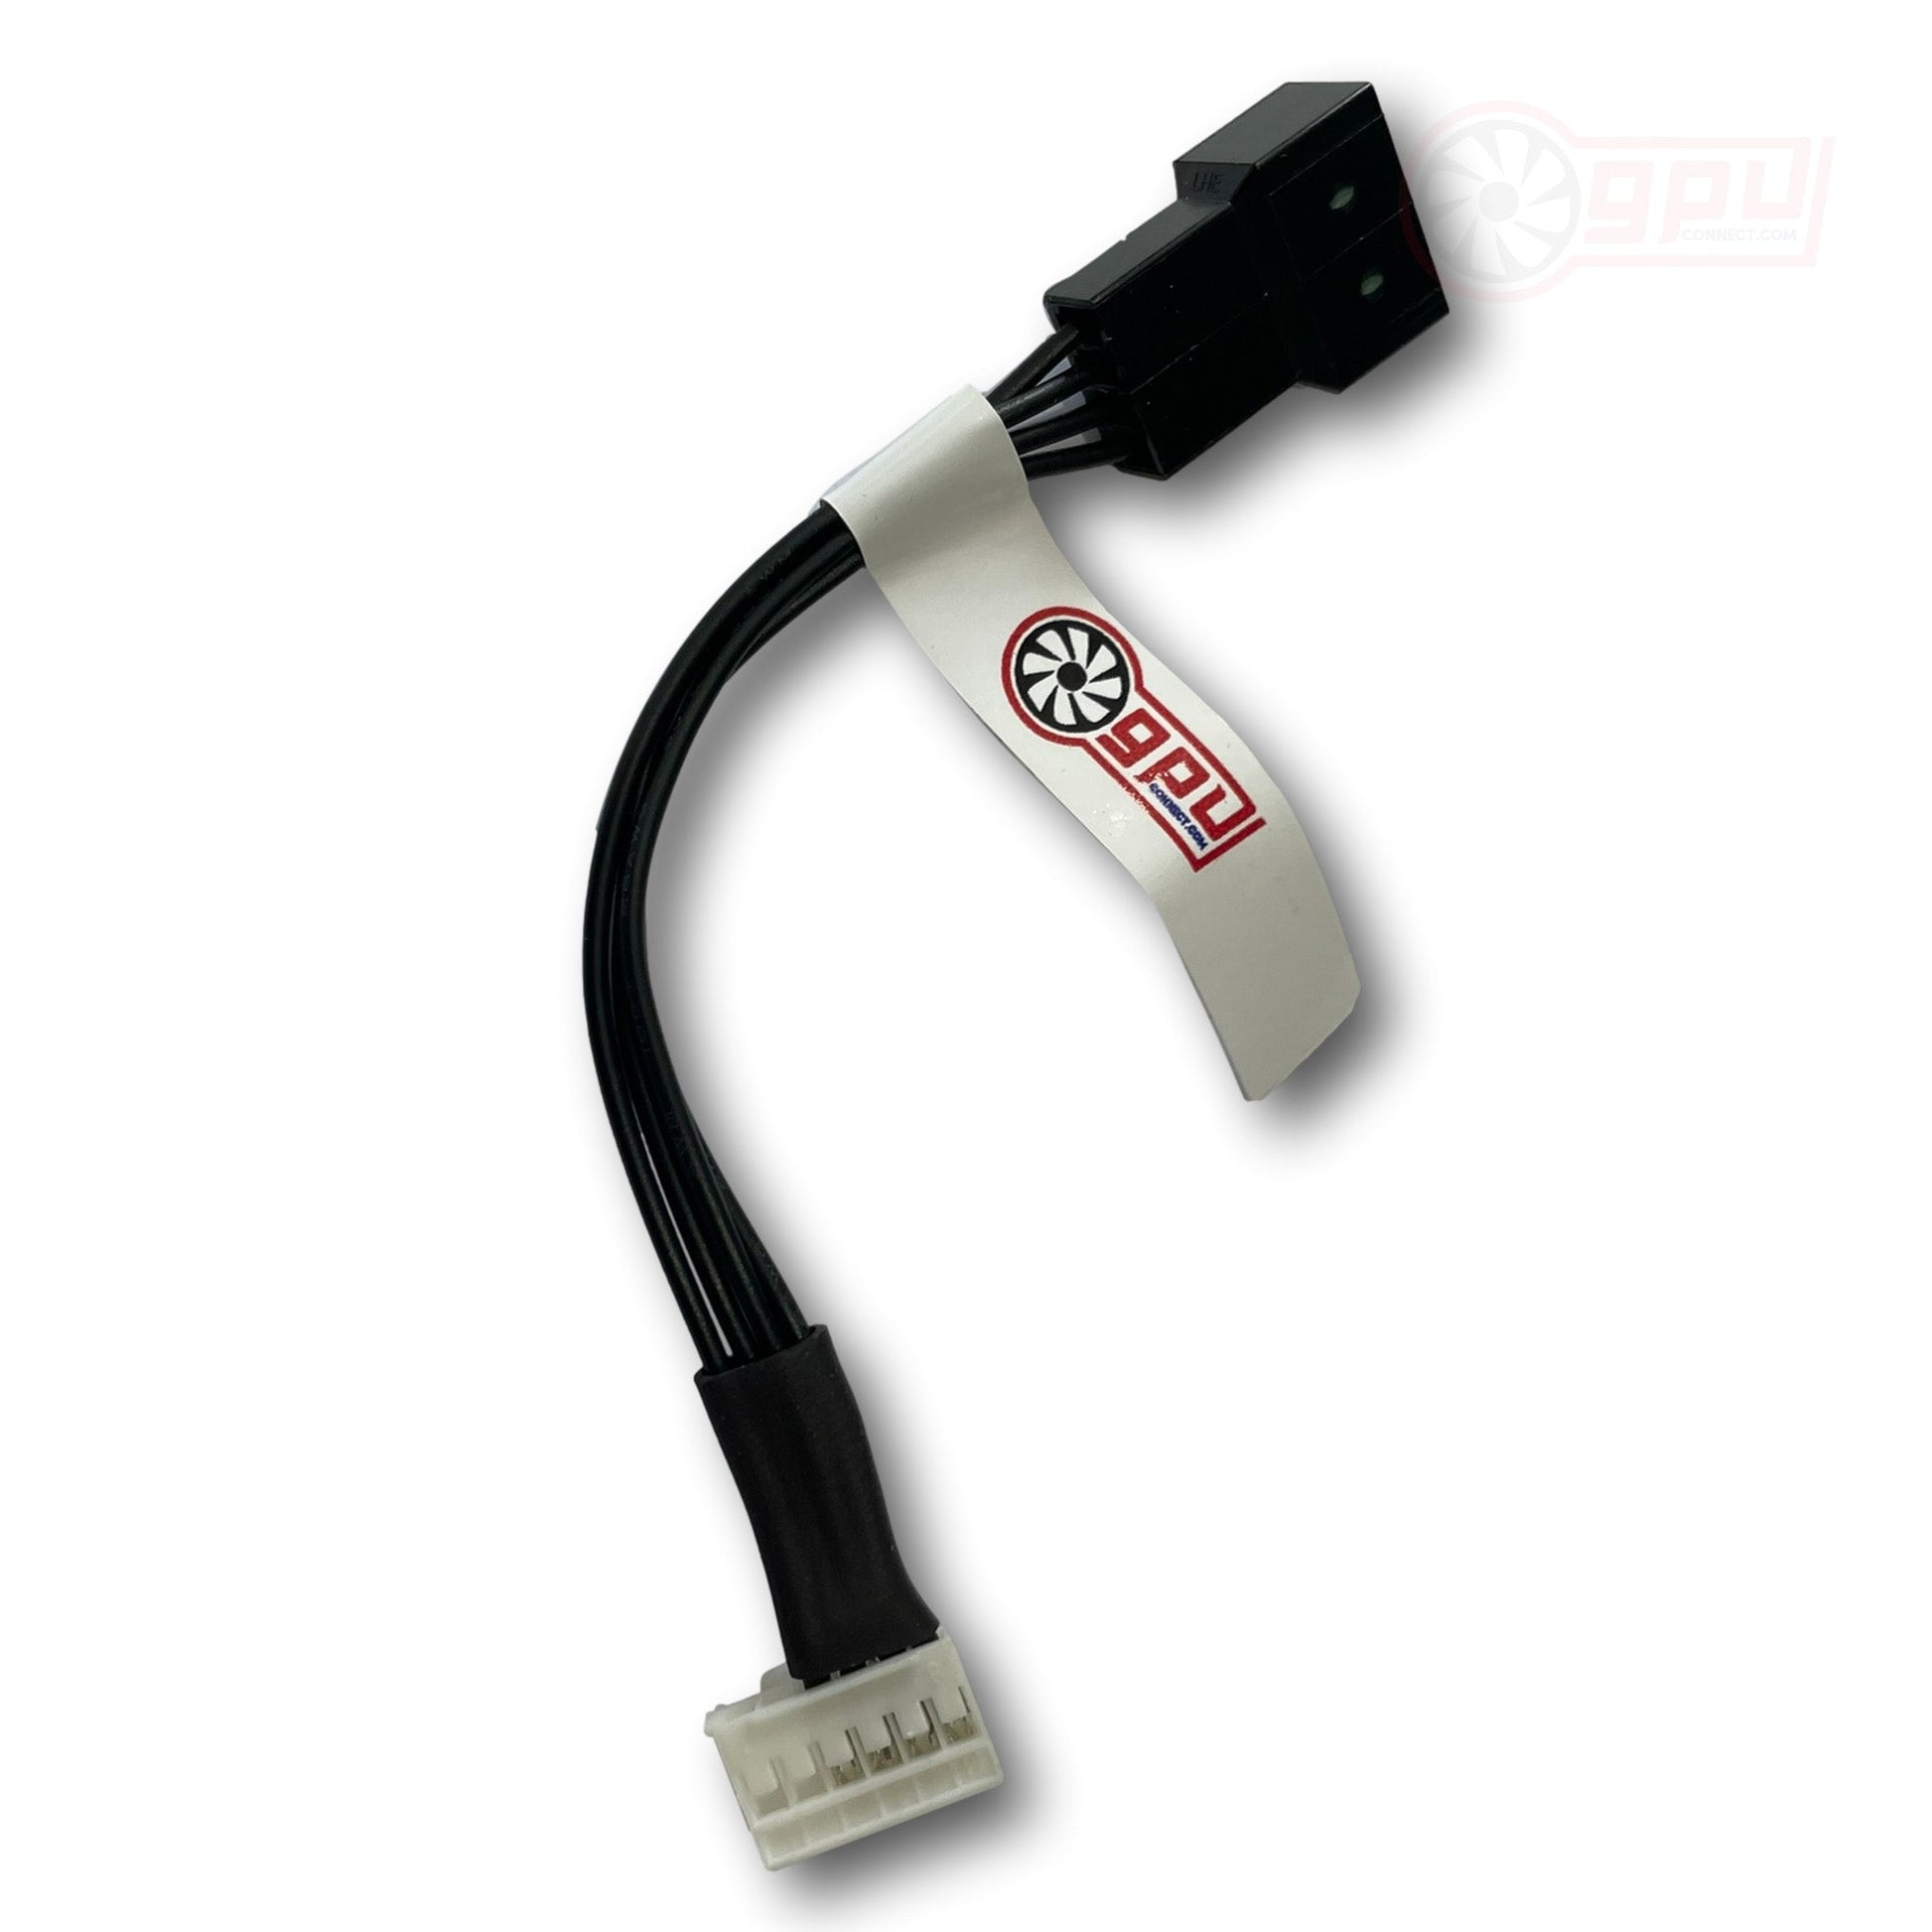 Asus PHOENIX RTX 2060 GTX 1650/60 Ti SUPER ITX 6 Pin Fan Adapter Deshroud Cable - GPUCONNECT.COM